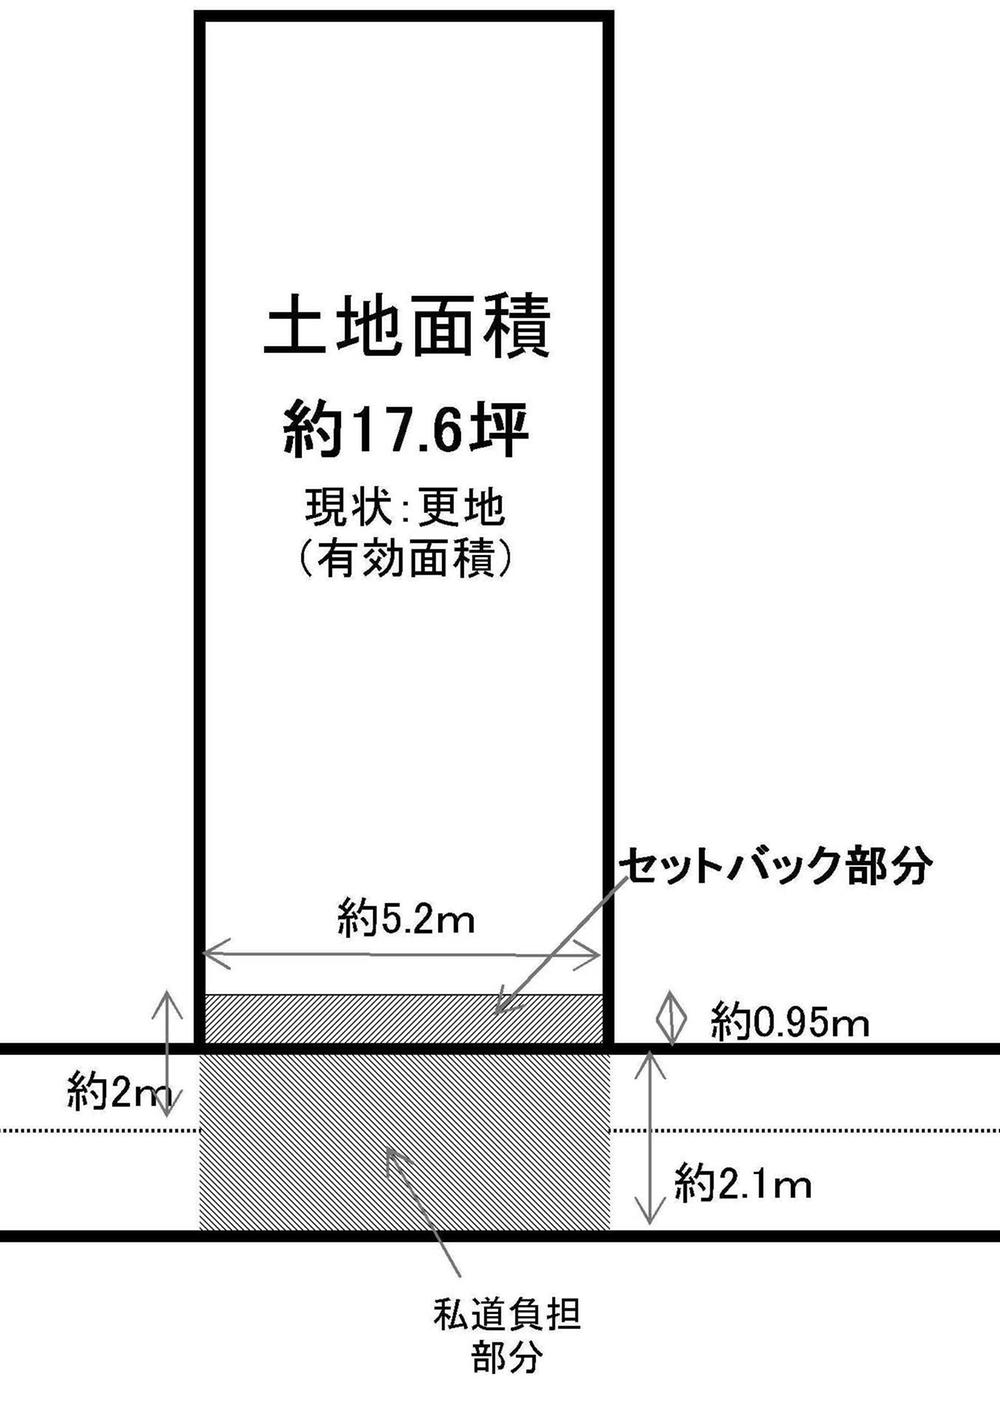 Compartment figure. Land price 11.5 million yen, Land area 74.29 sq m